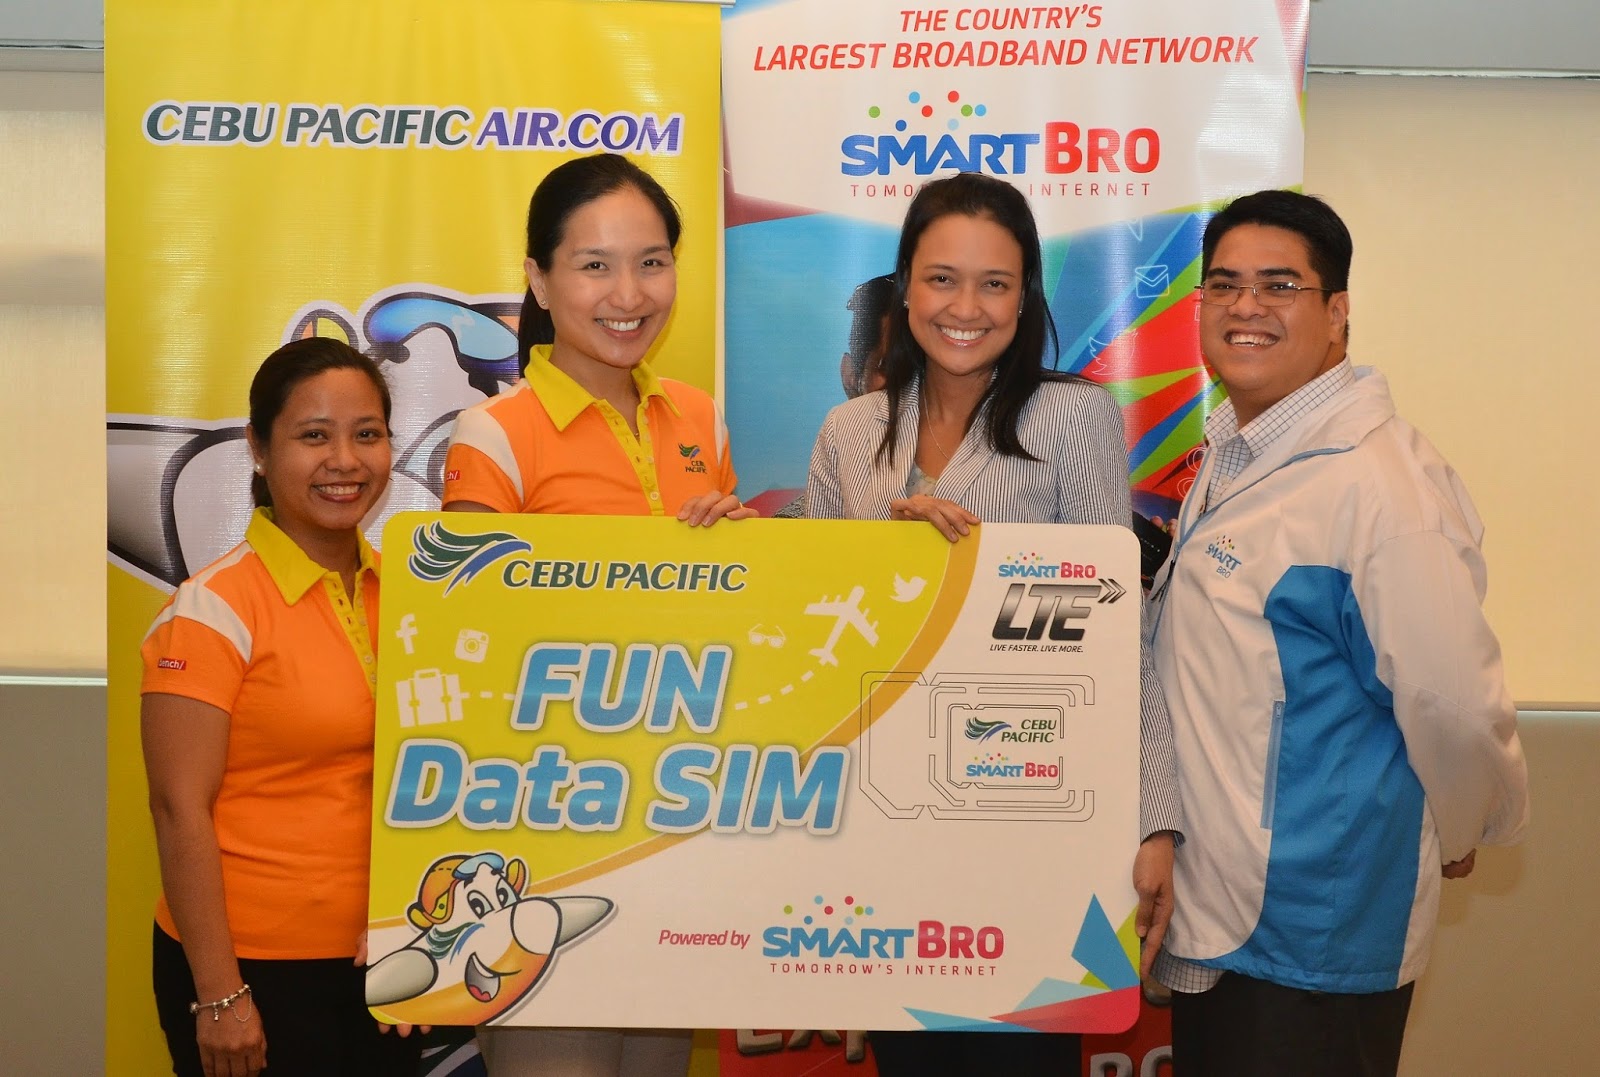 Cebu Pacific Fun Data SIM powered by Smart Bro